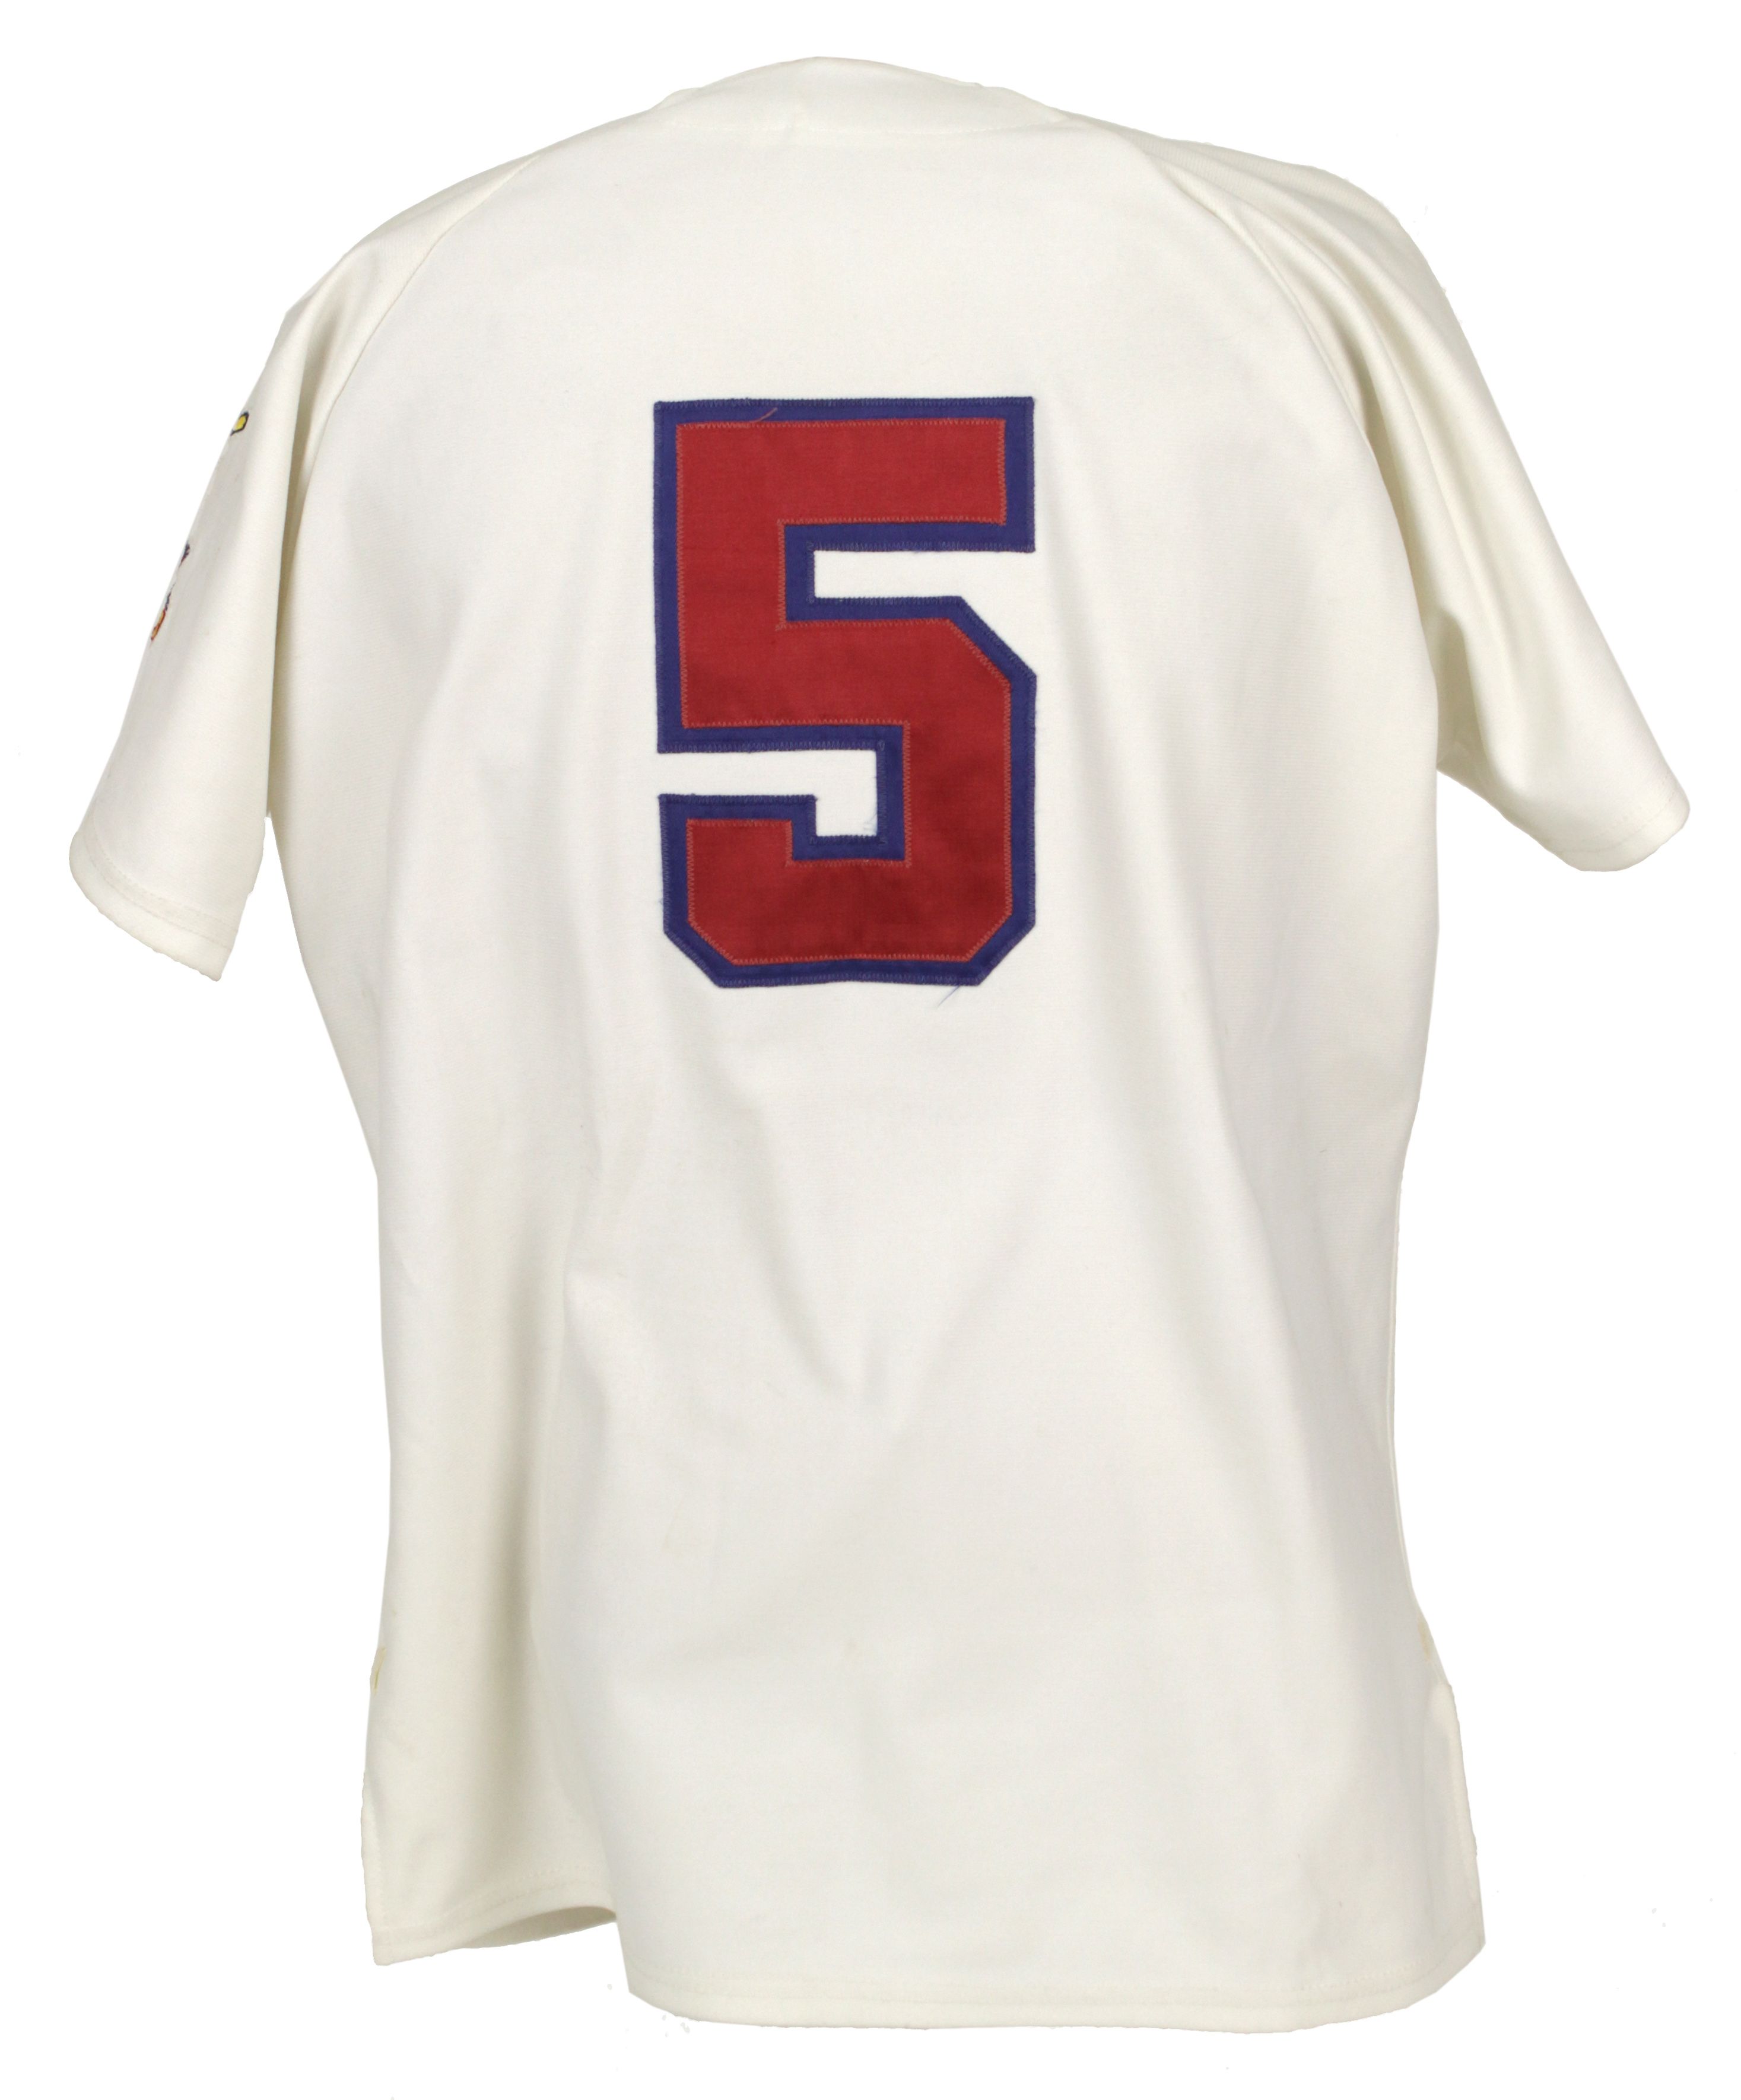 8x10 photo baseball, Nomar Garciaparra, Chicago Cubs white jersey